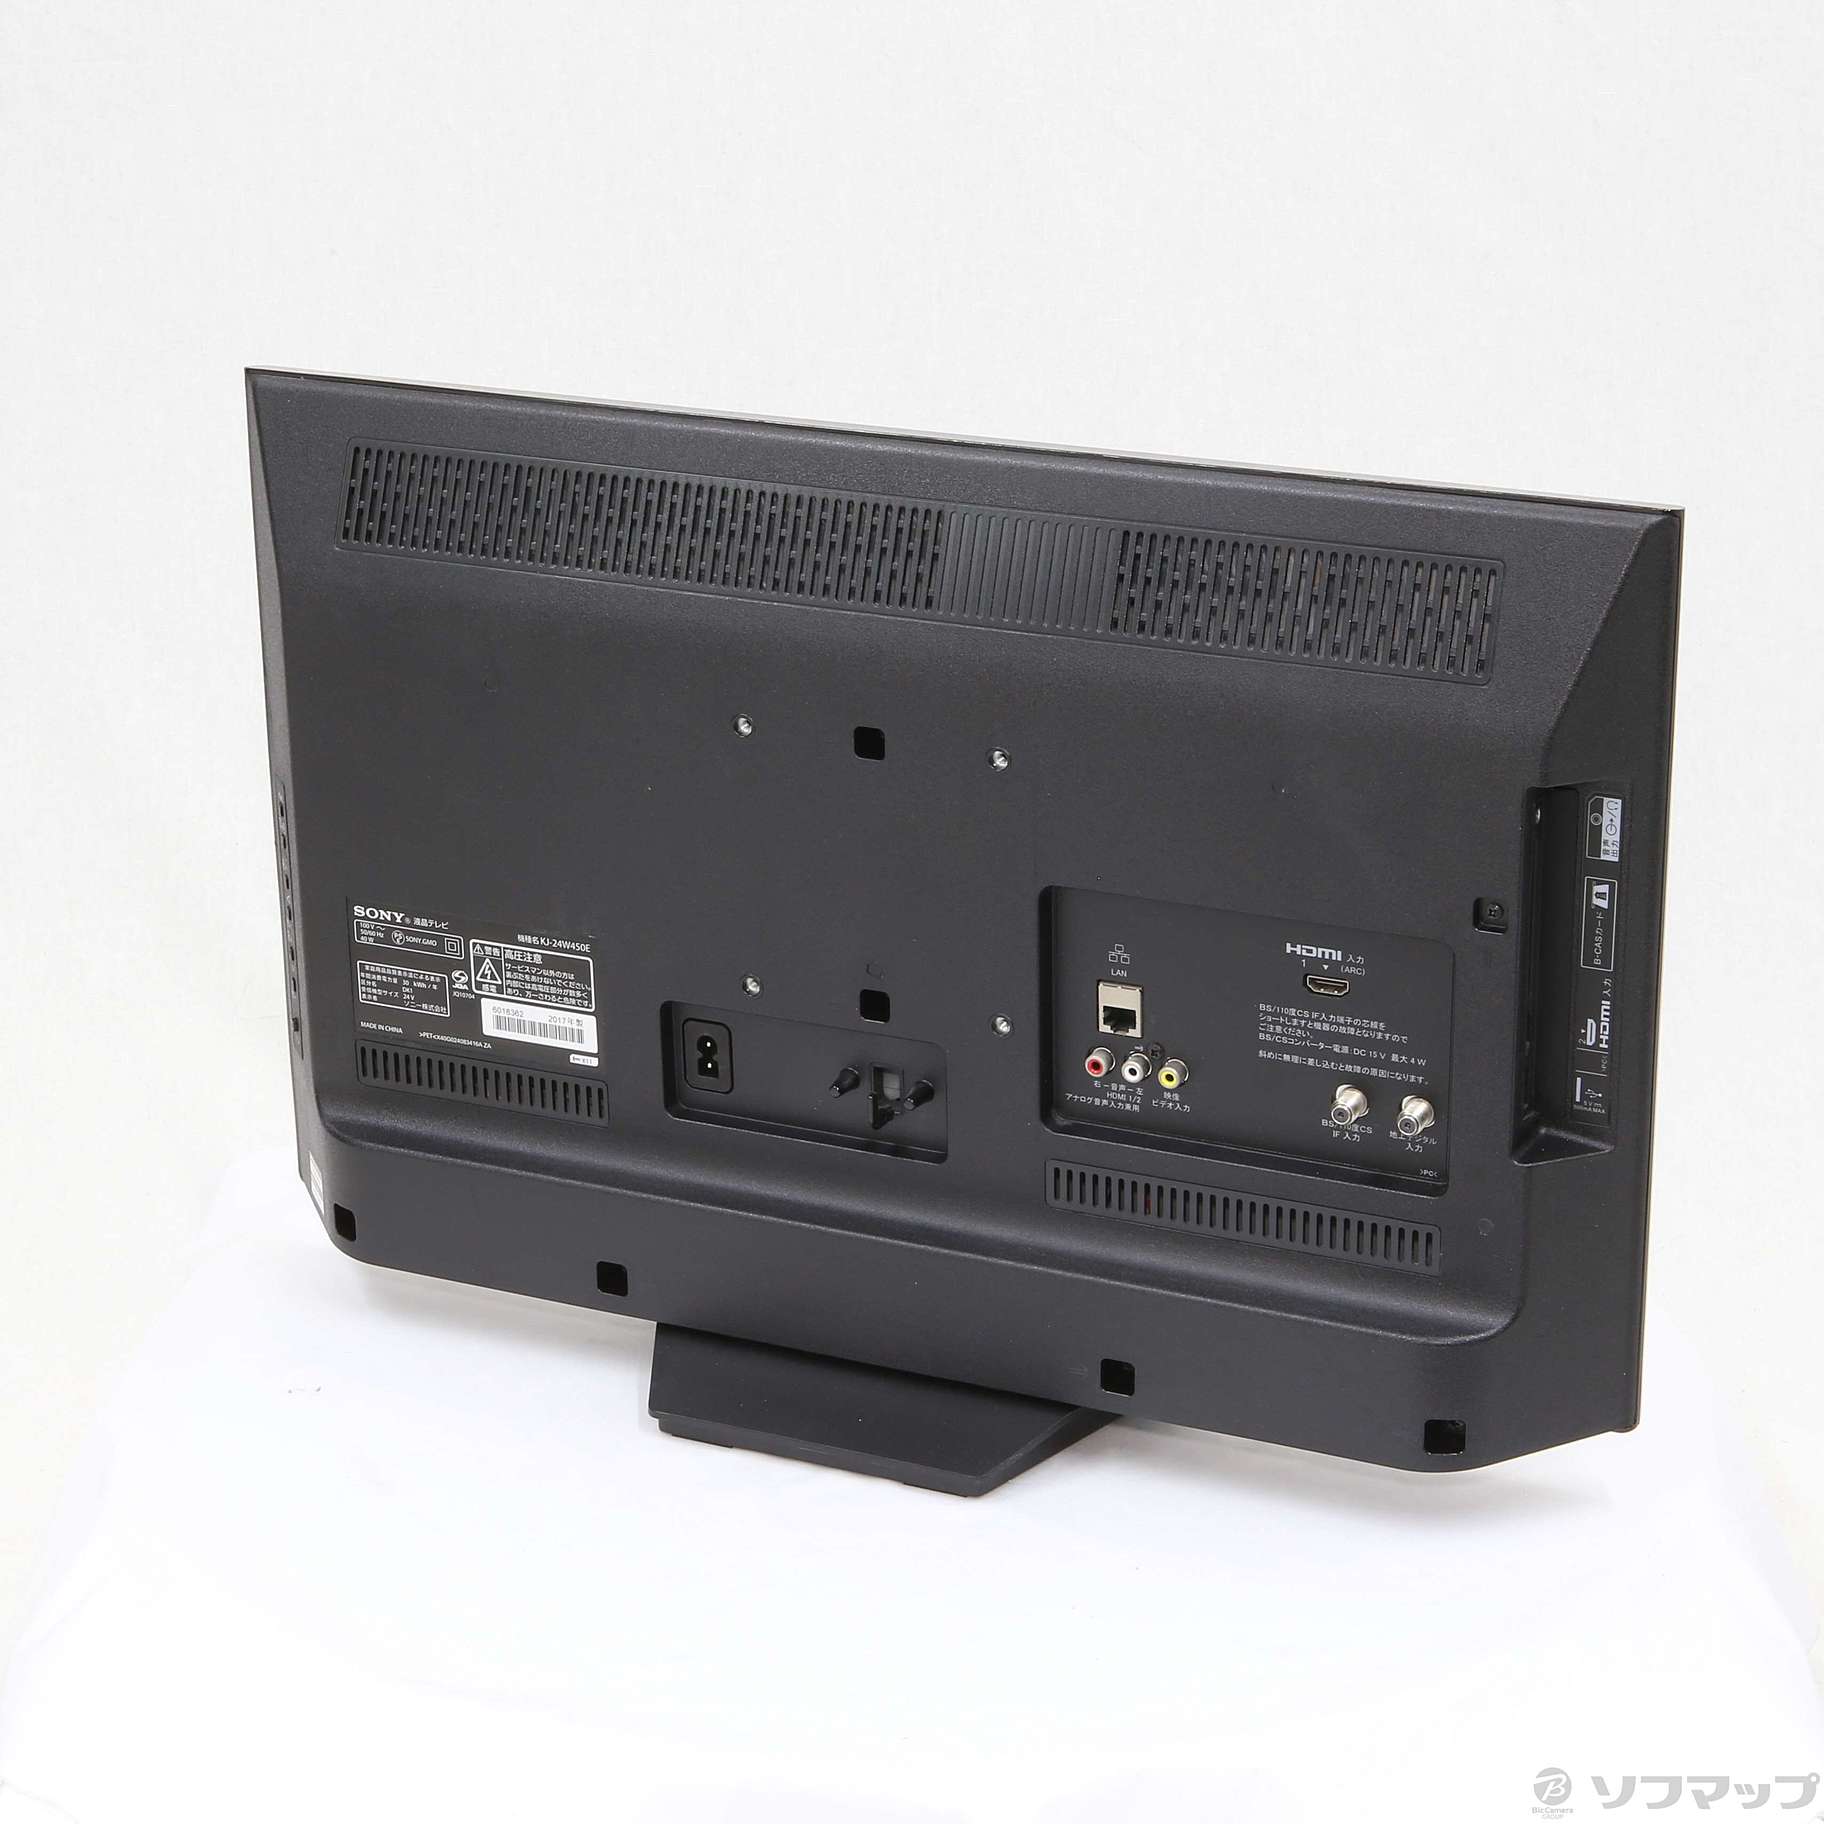 テレビkj-24w450e - テレビ